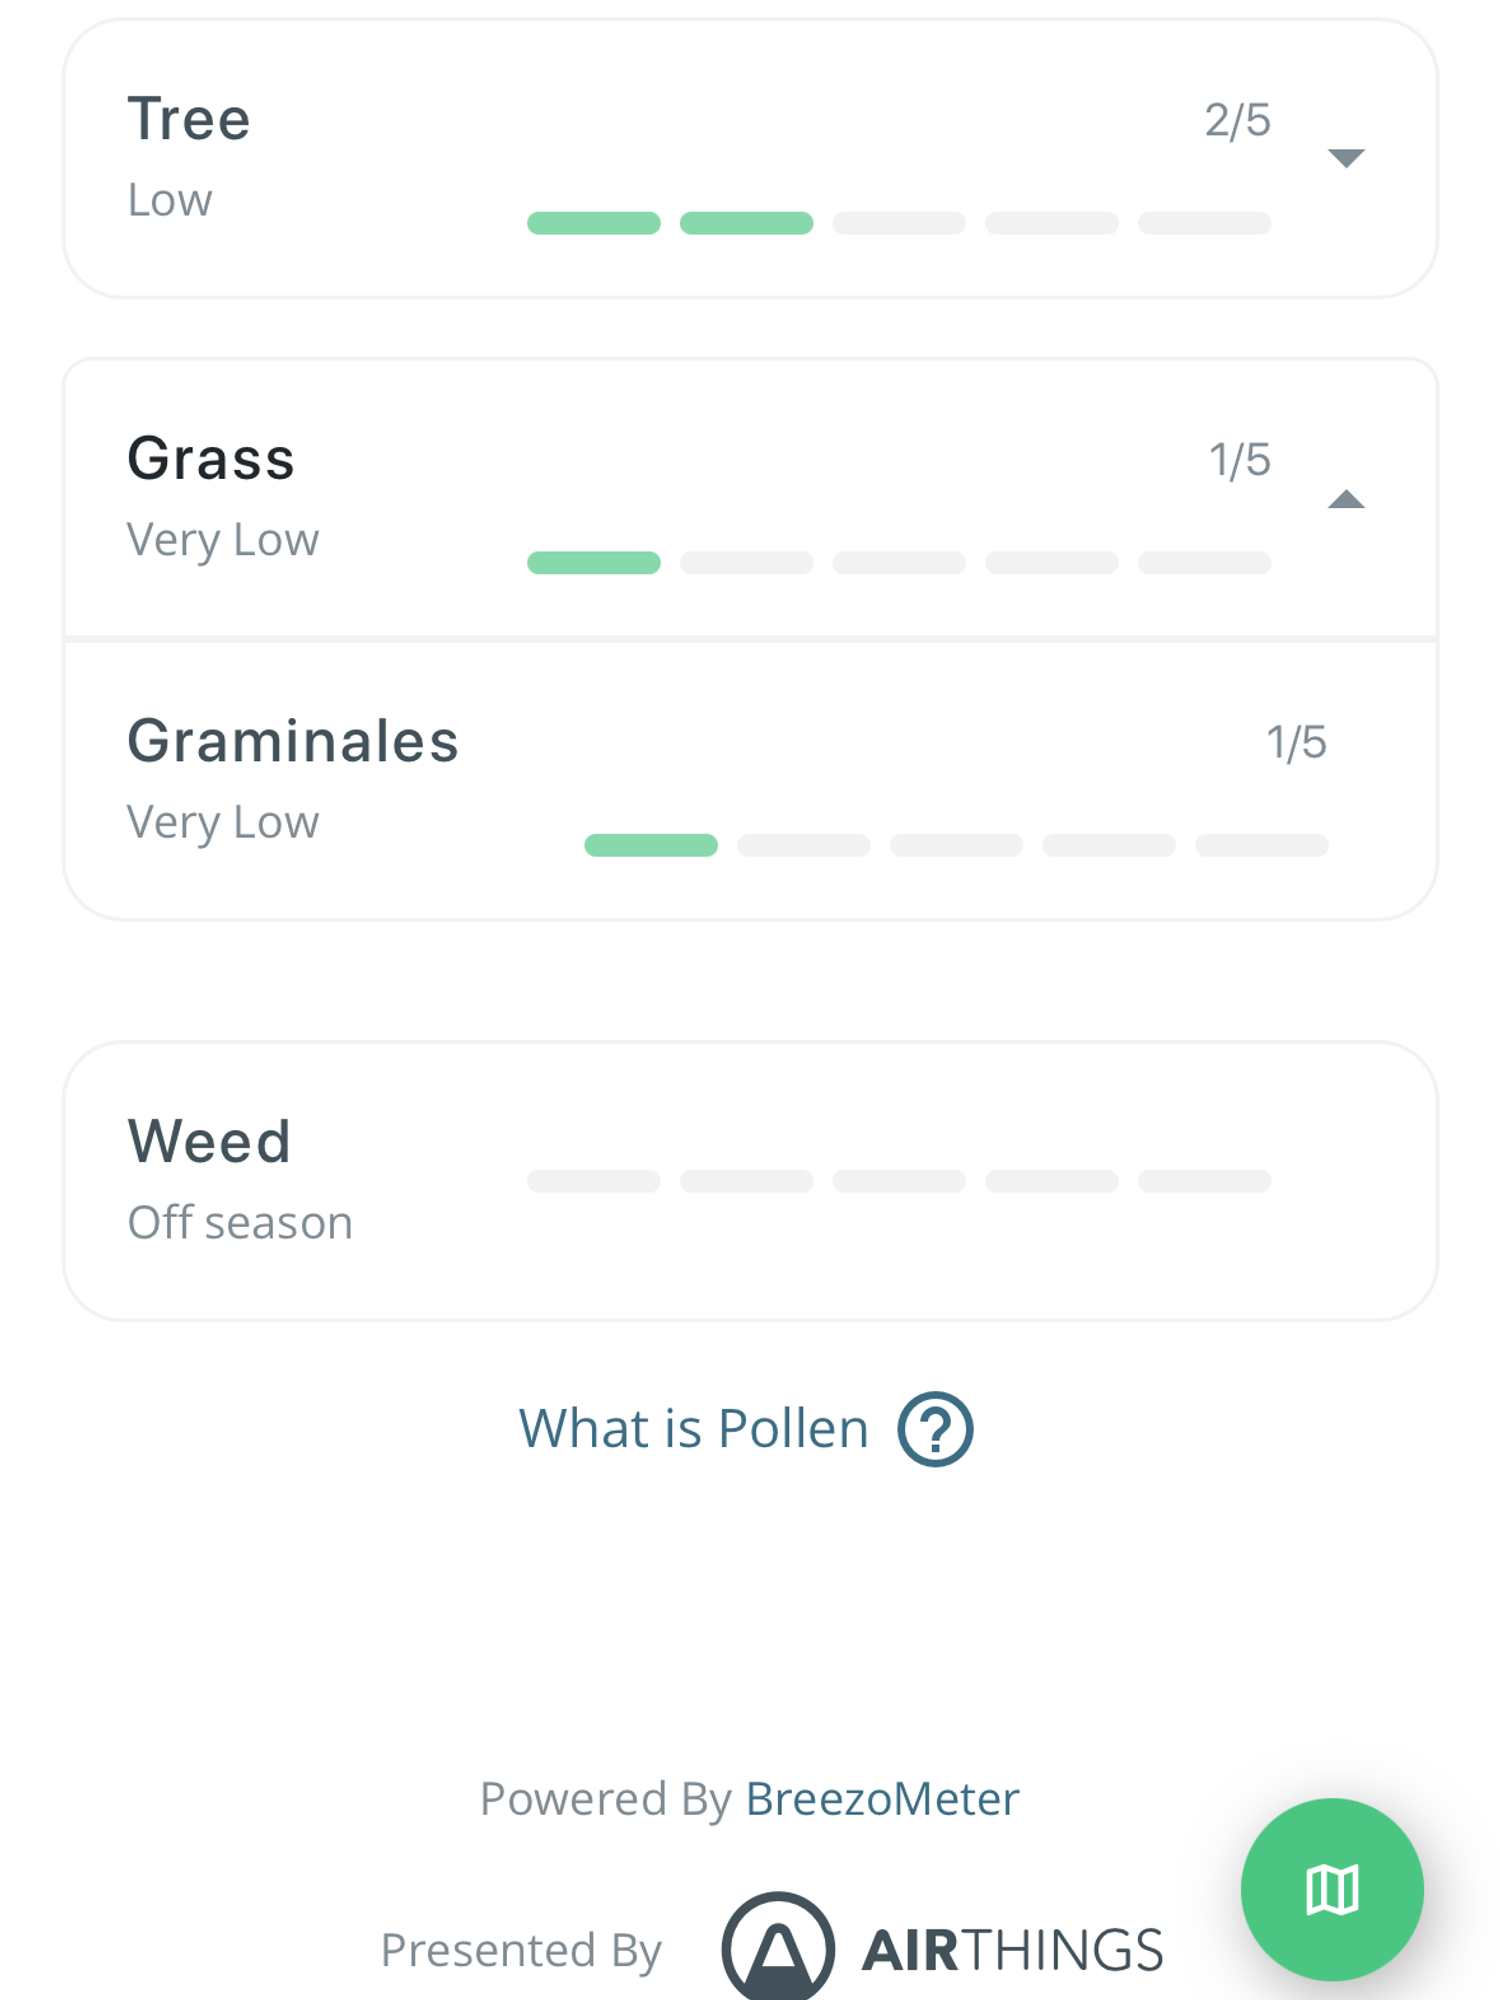 Screenshot of Pollen readings in the Airthings app